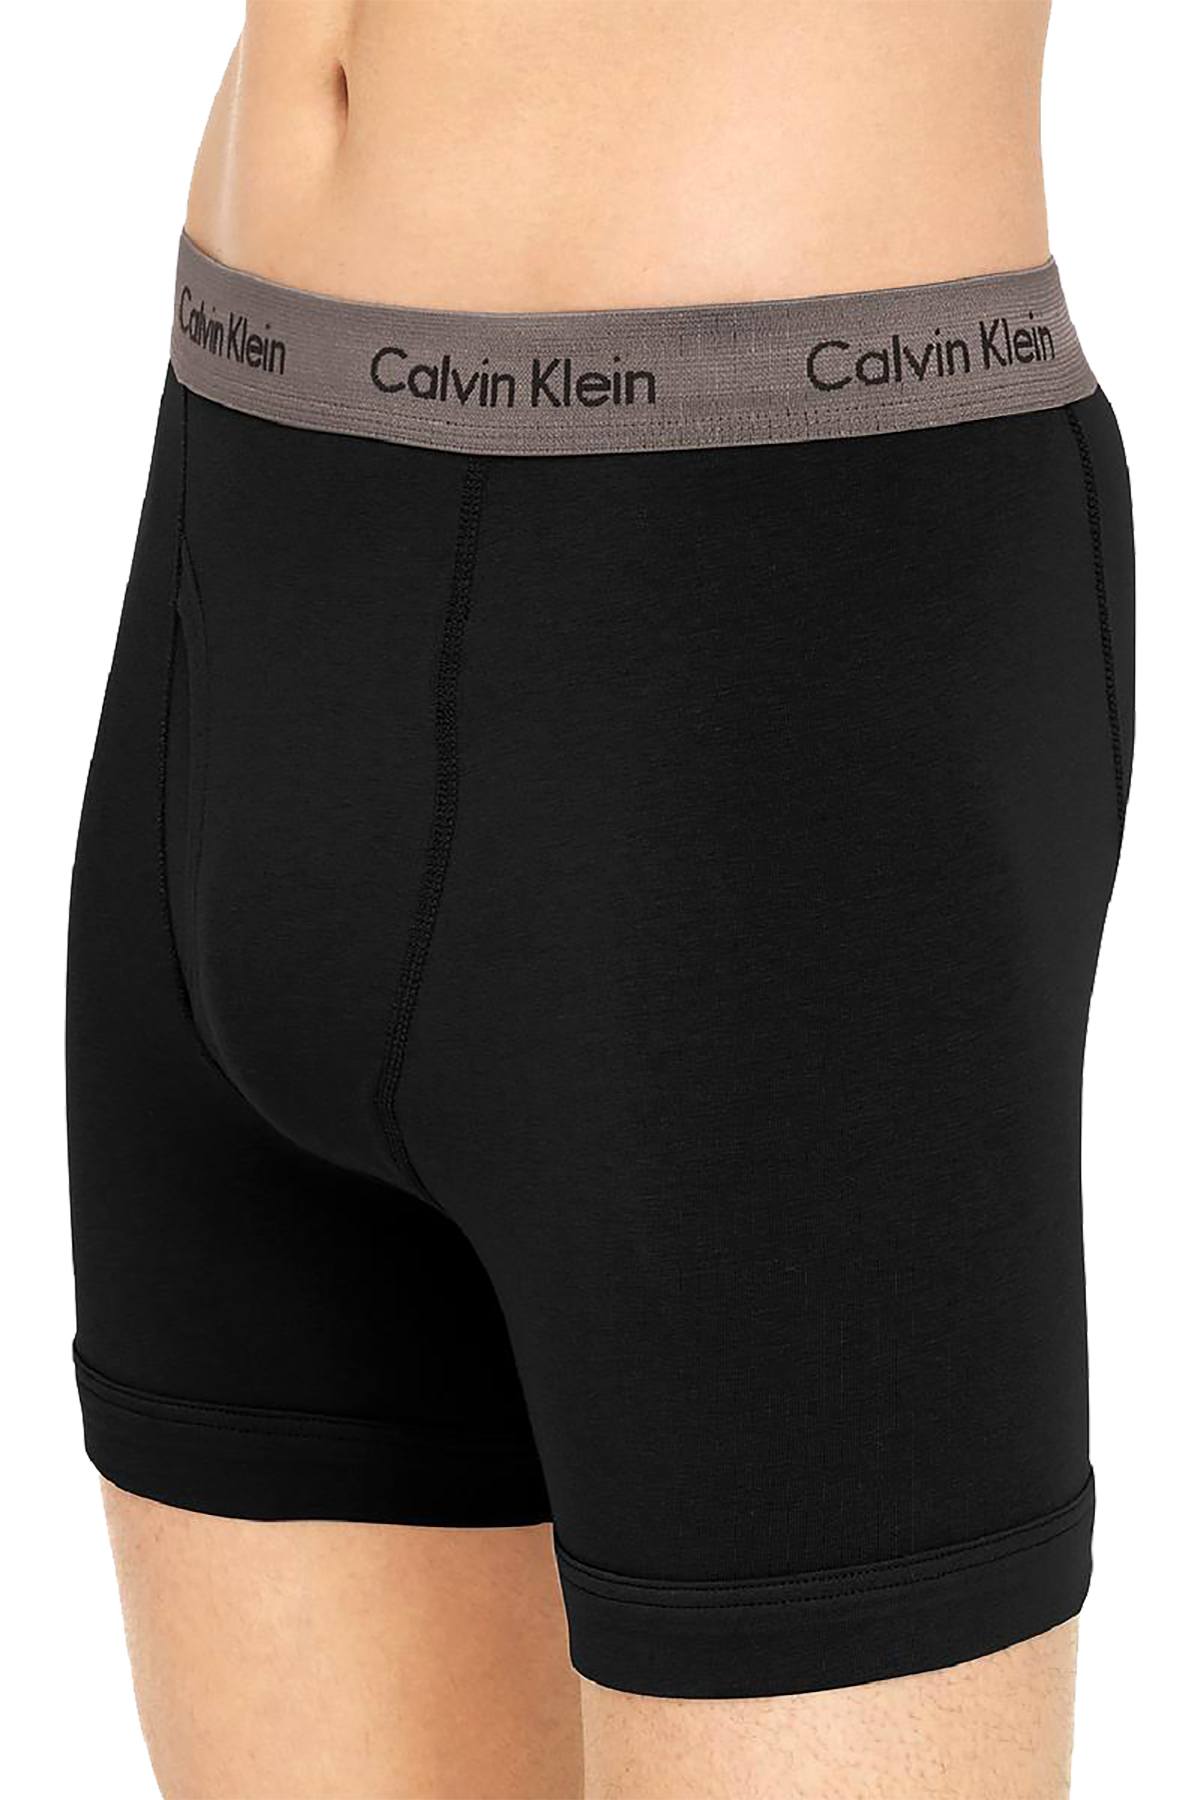 Calvin Klein Classic Fit Cotton Stretch Boxer Brief 3-Pack | CheapUndies